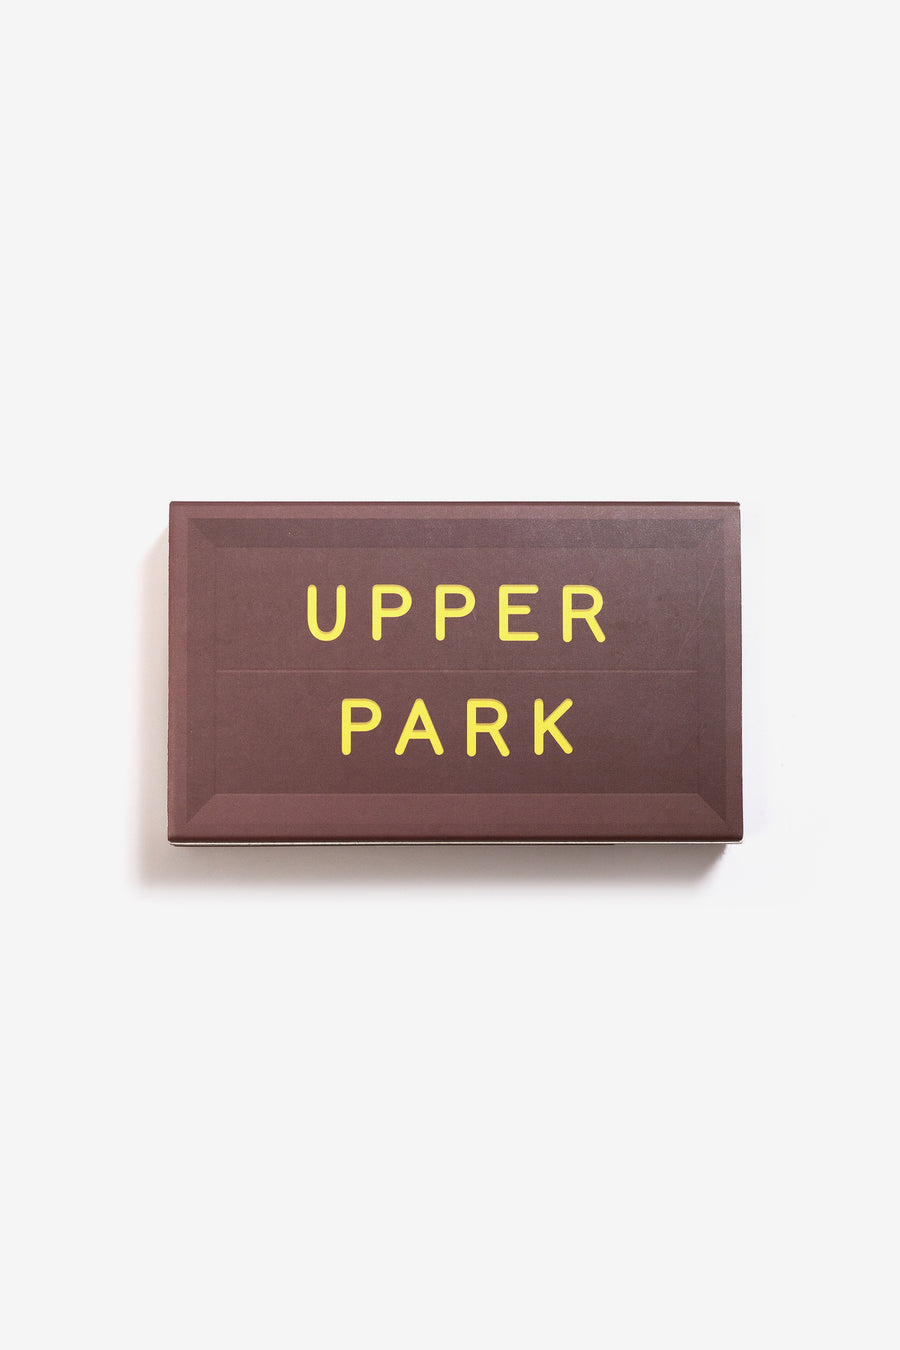 Upper Park Sign Matches - Chico, California - 4" Box